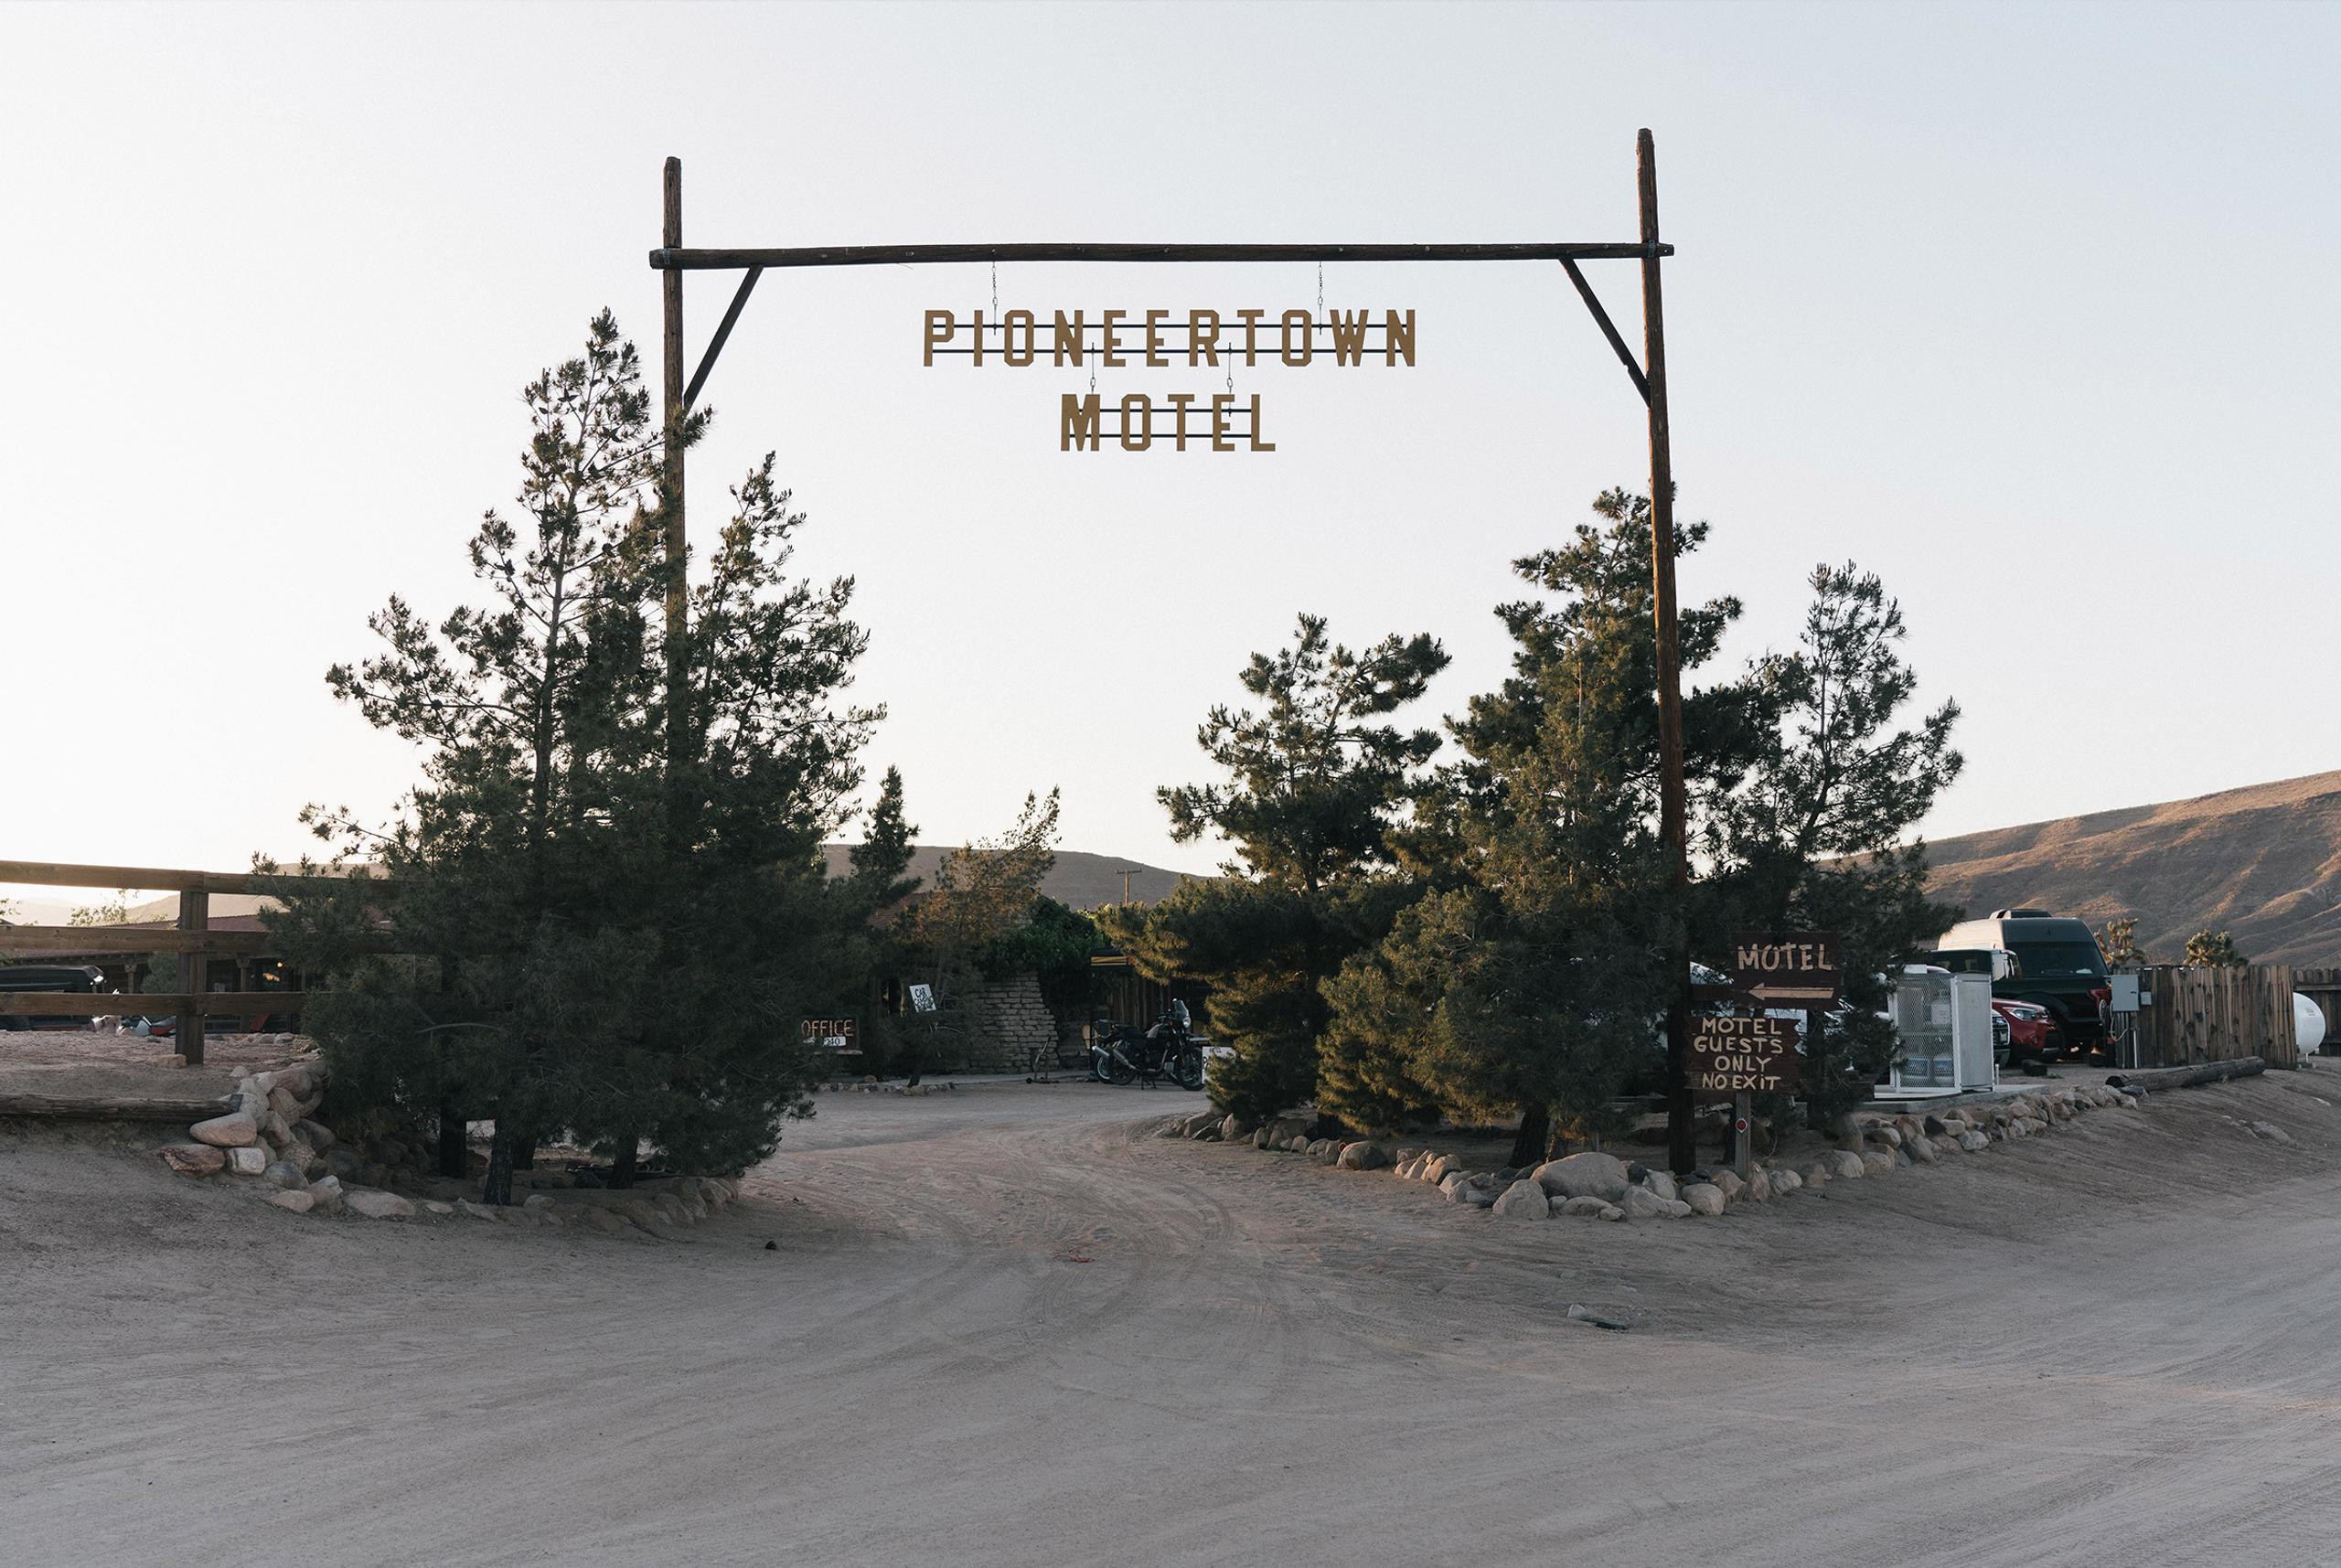 pioneertown motel sign